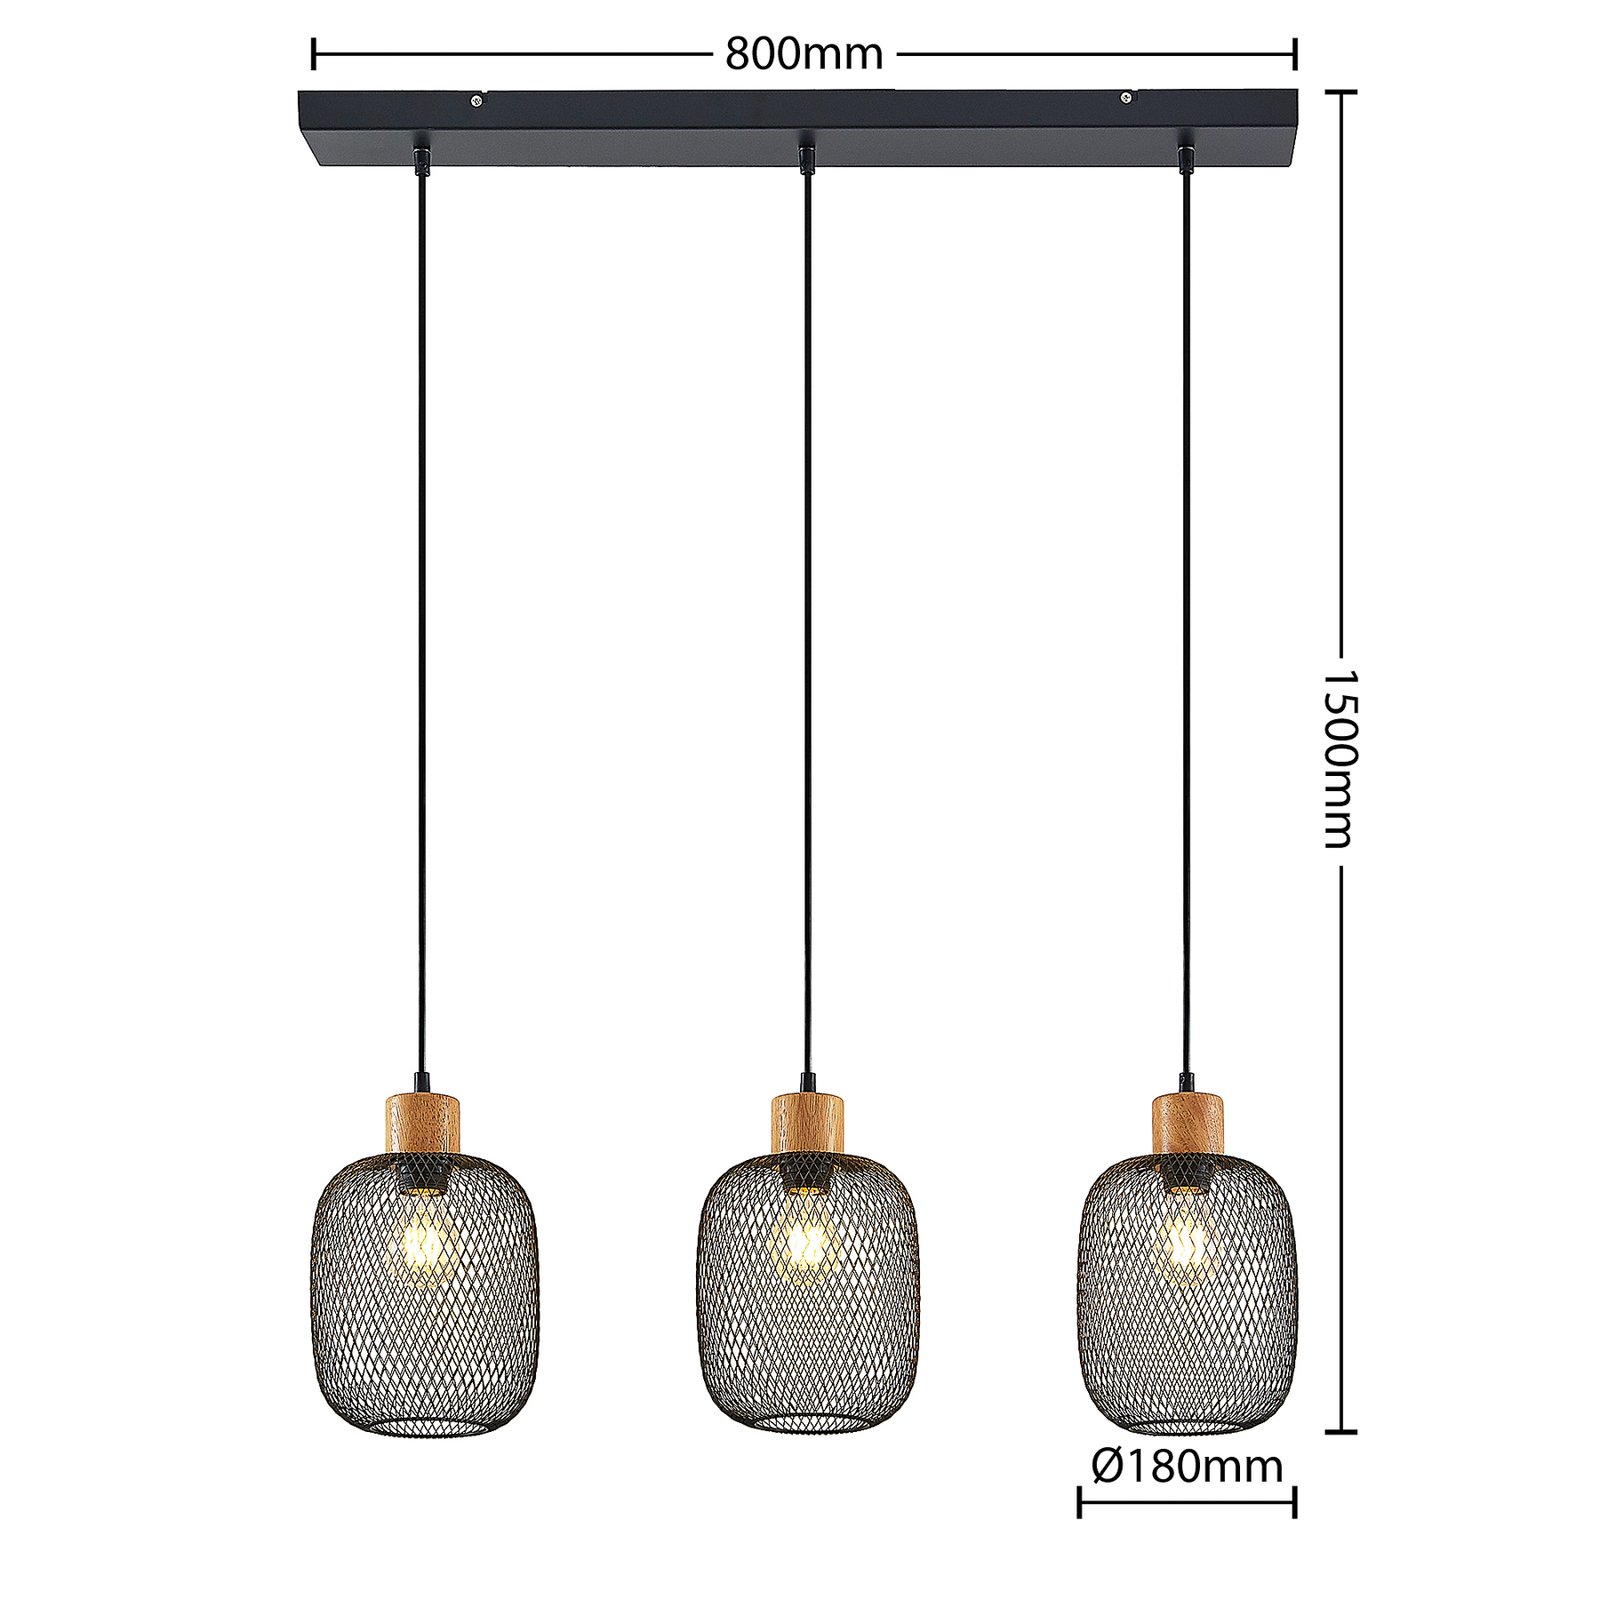 Lindby Djuna kooi-hanglamp, 3-lamps